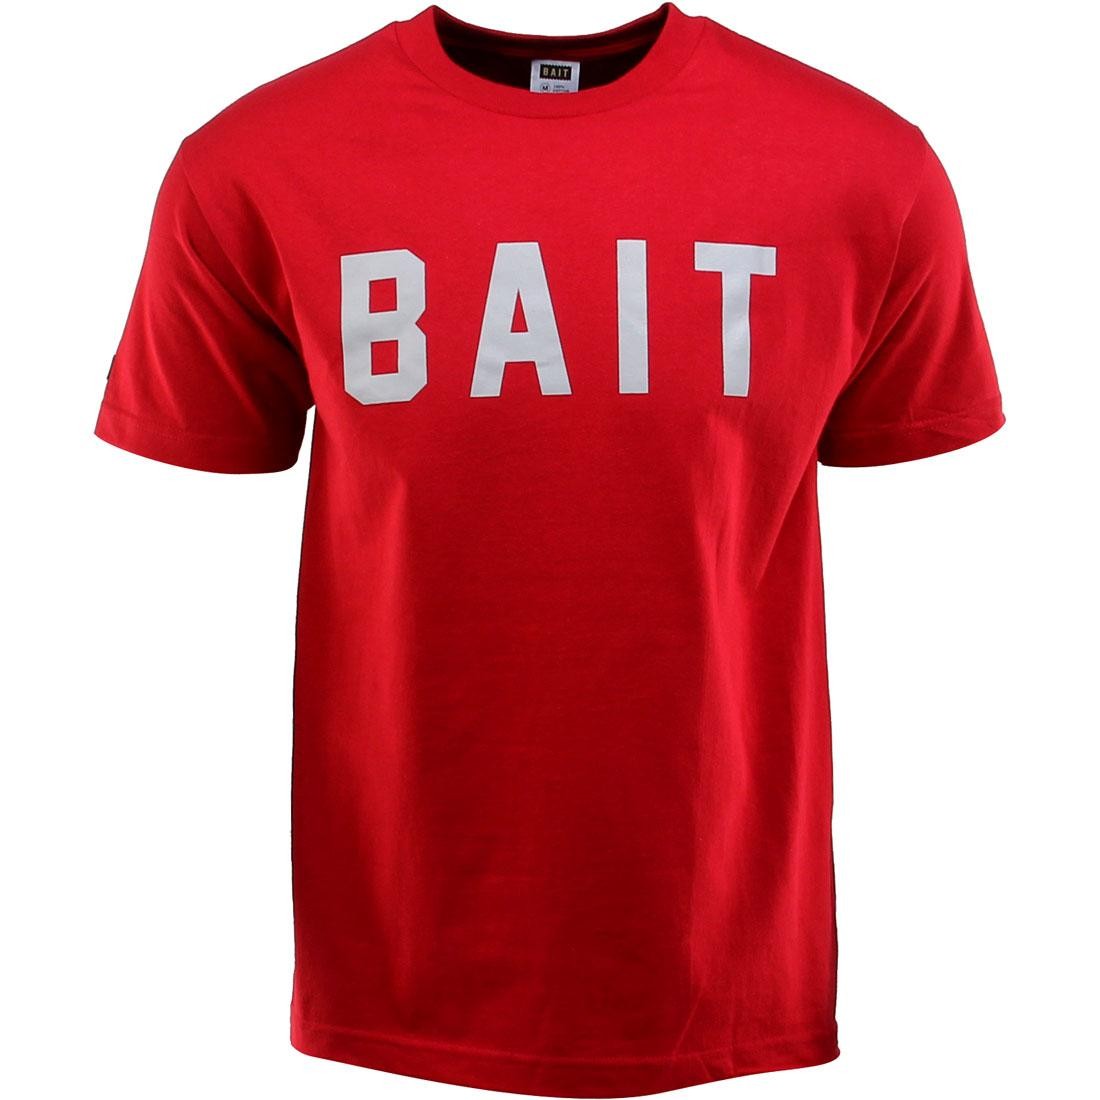 BAIT Logo Tee (red / cardinal red / gray)